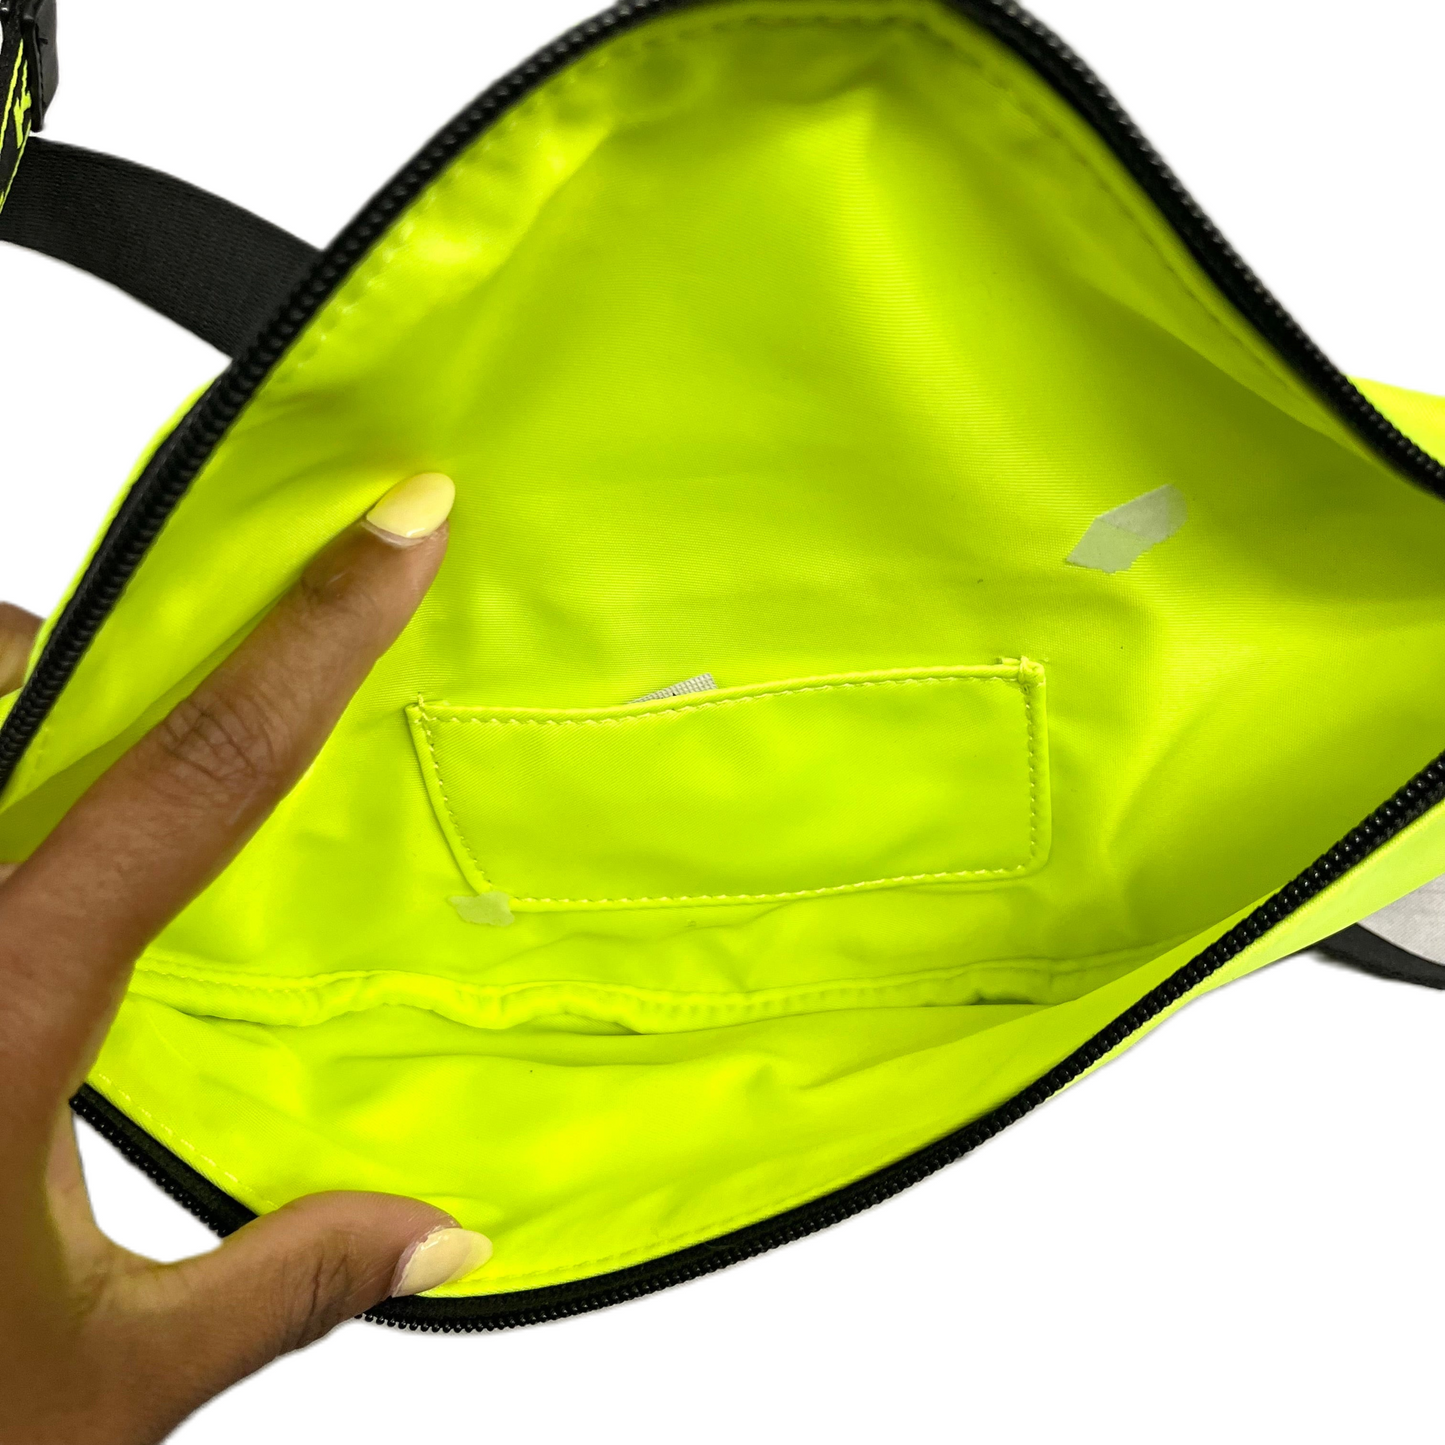 Belt Bag Designer By Michael Kors, Size: Medium